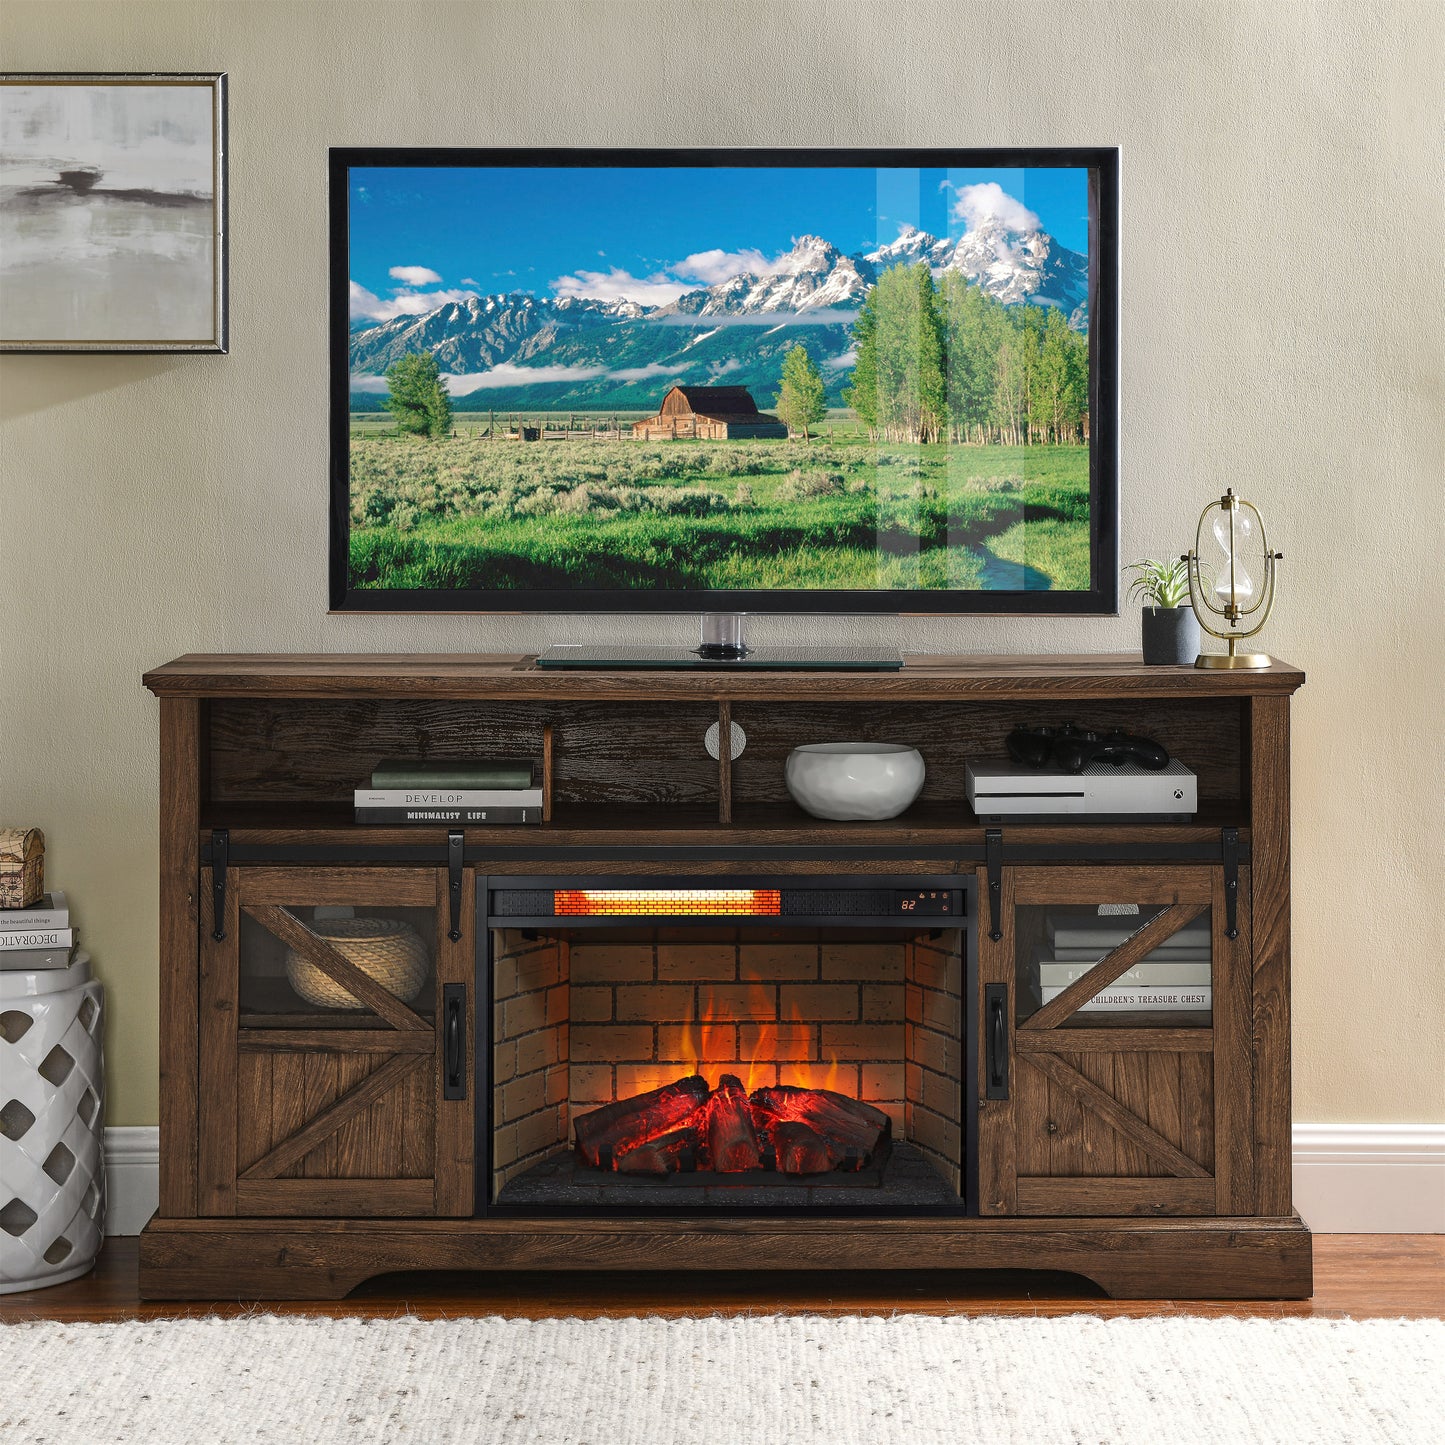 26-Inch Infrared Quartz Heater Fireplace Insert with Vintage Woodlog Design